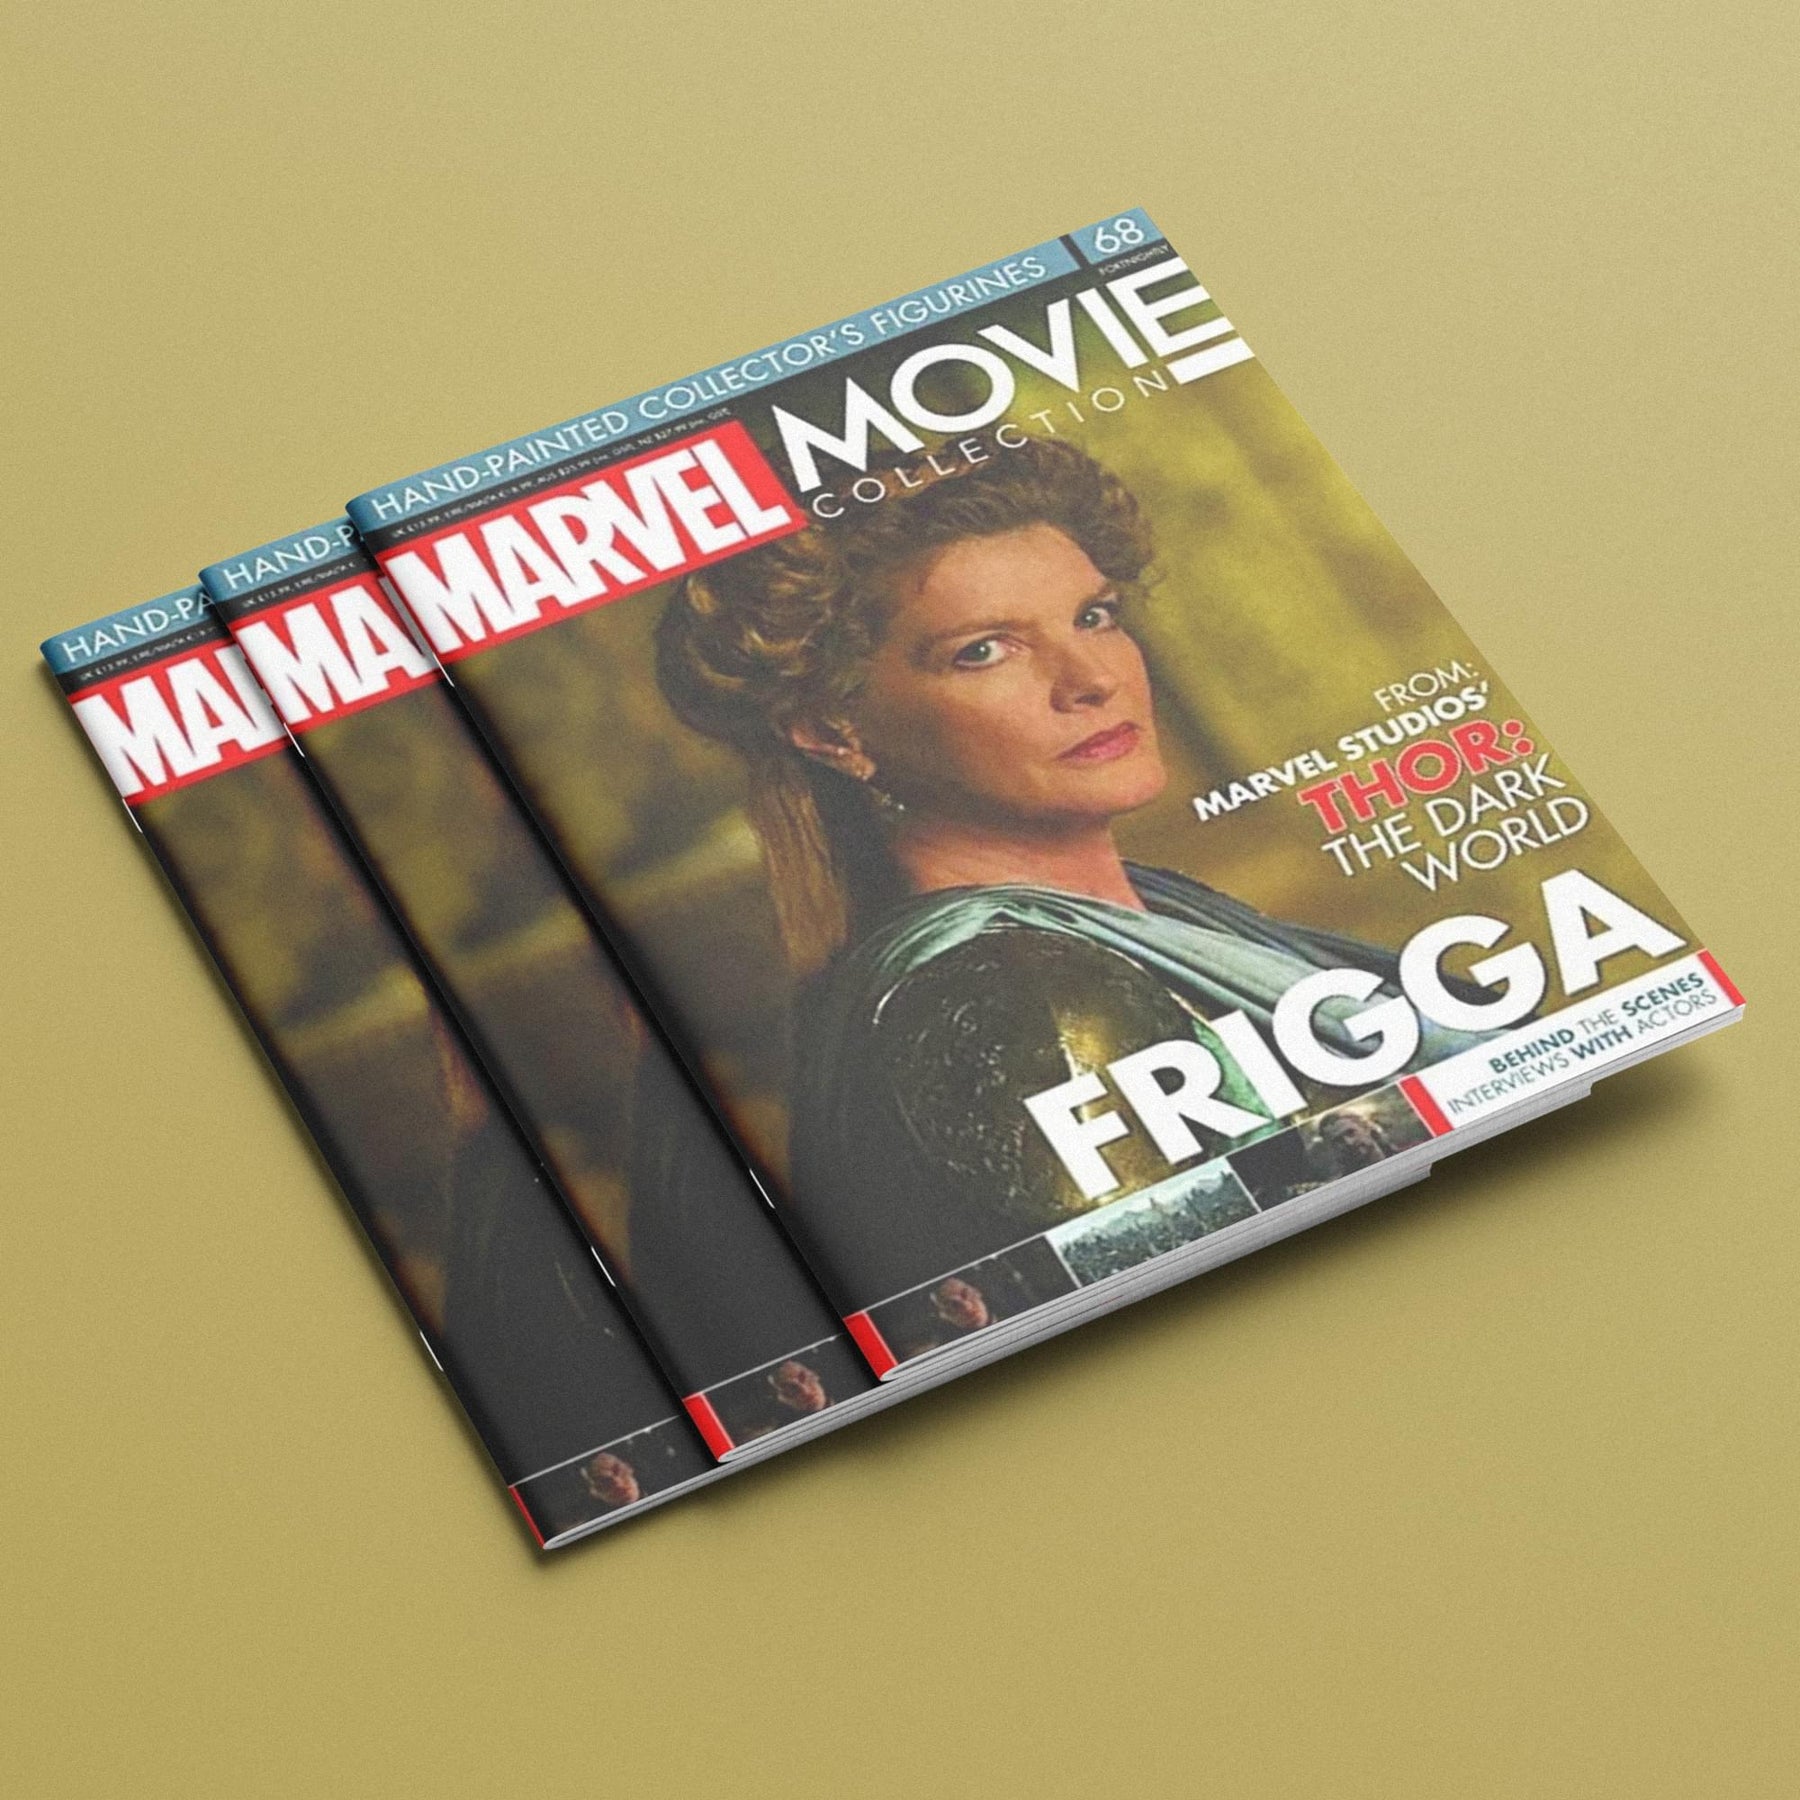 Marvel Movie Collection Magazine Issue #68 Figga